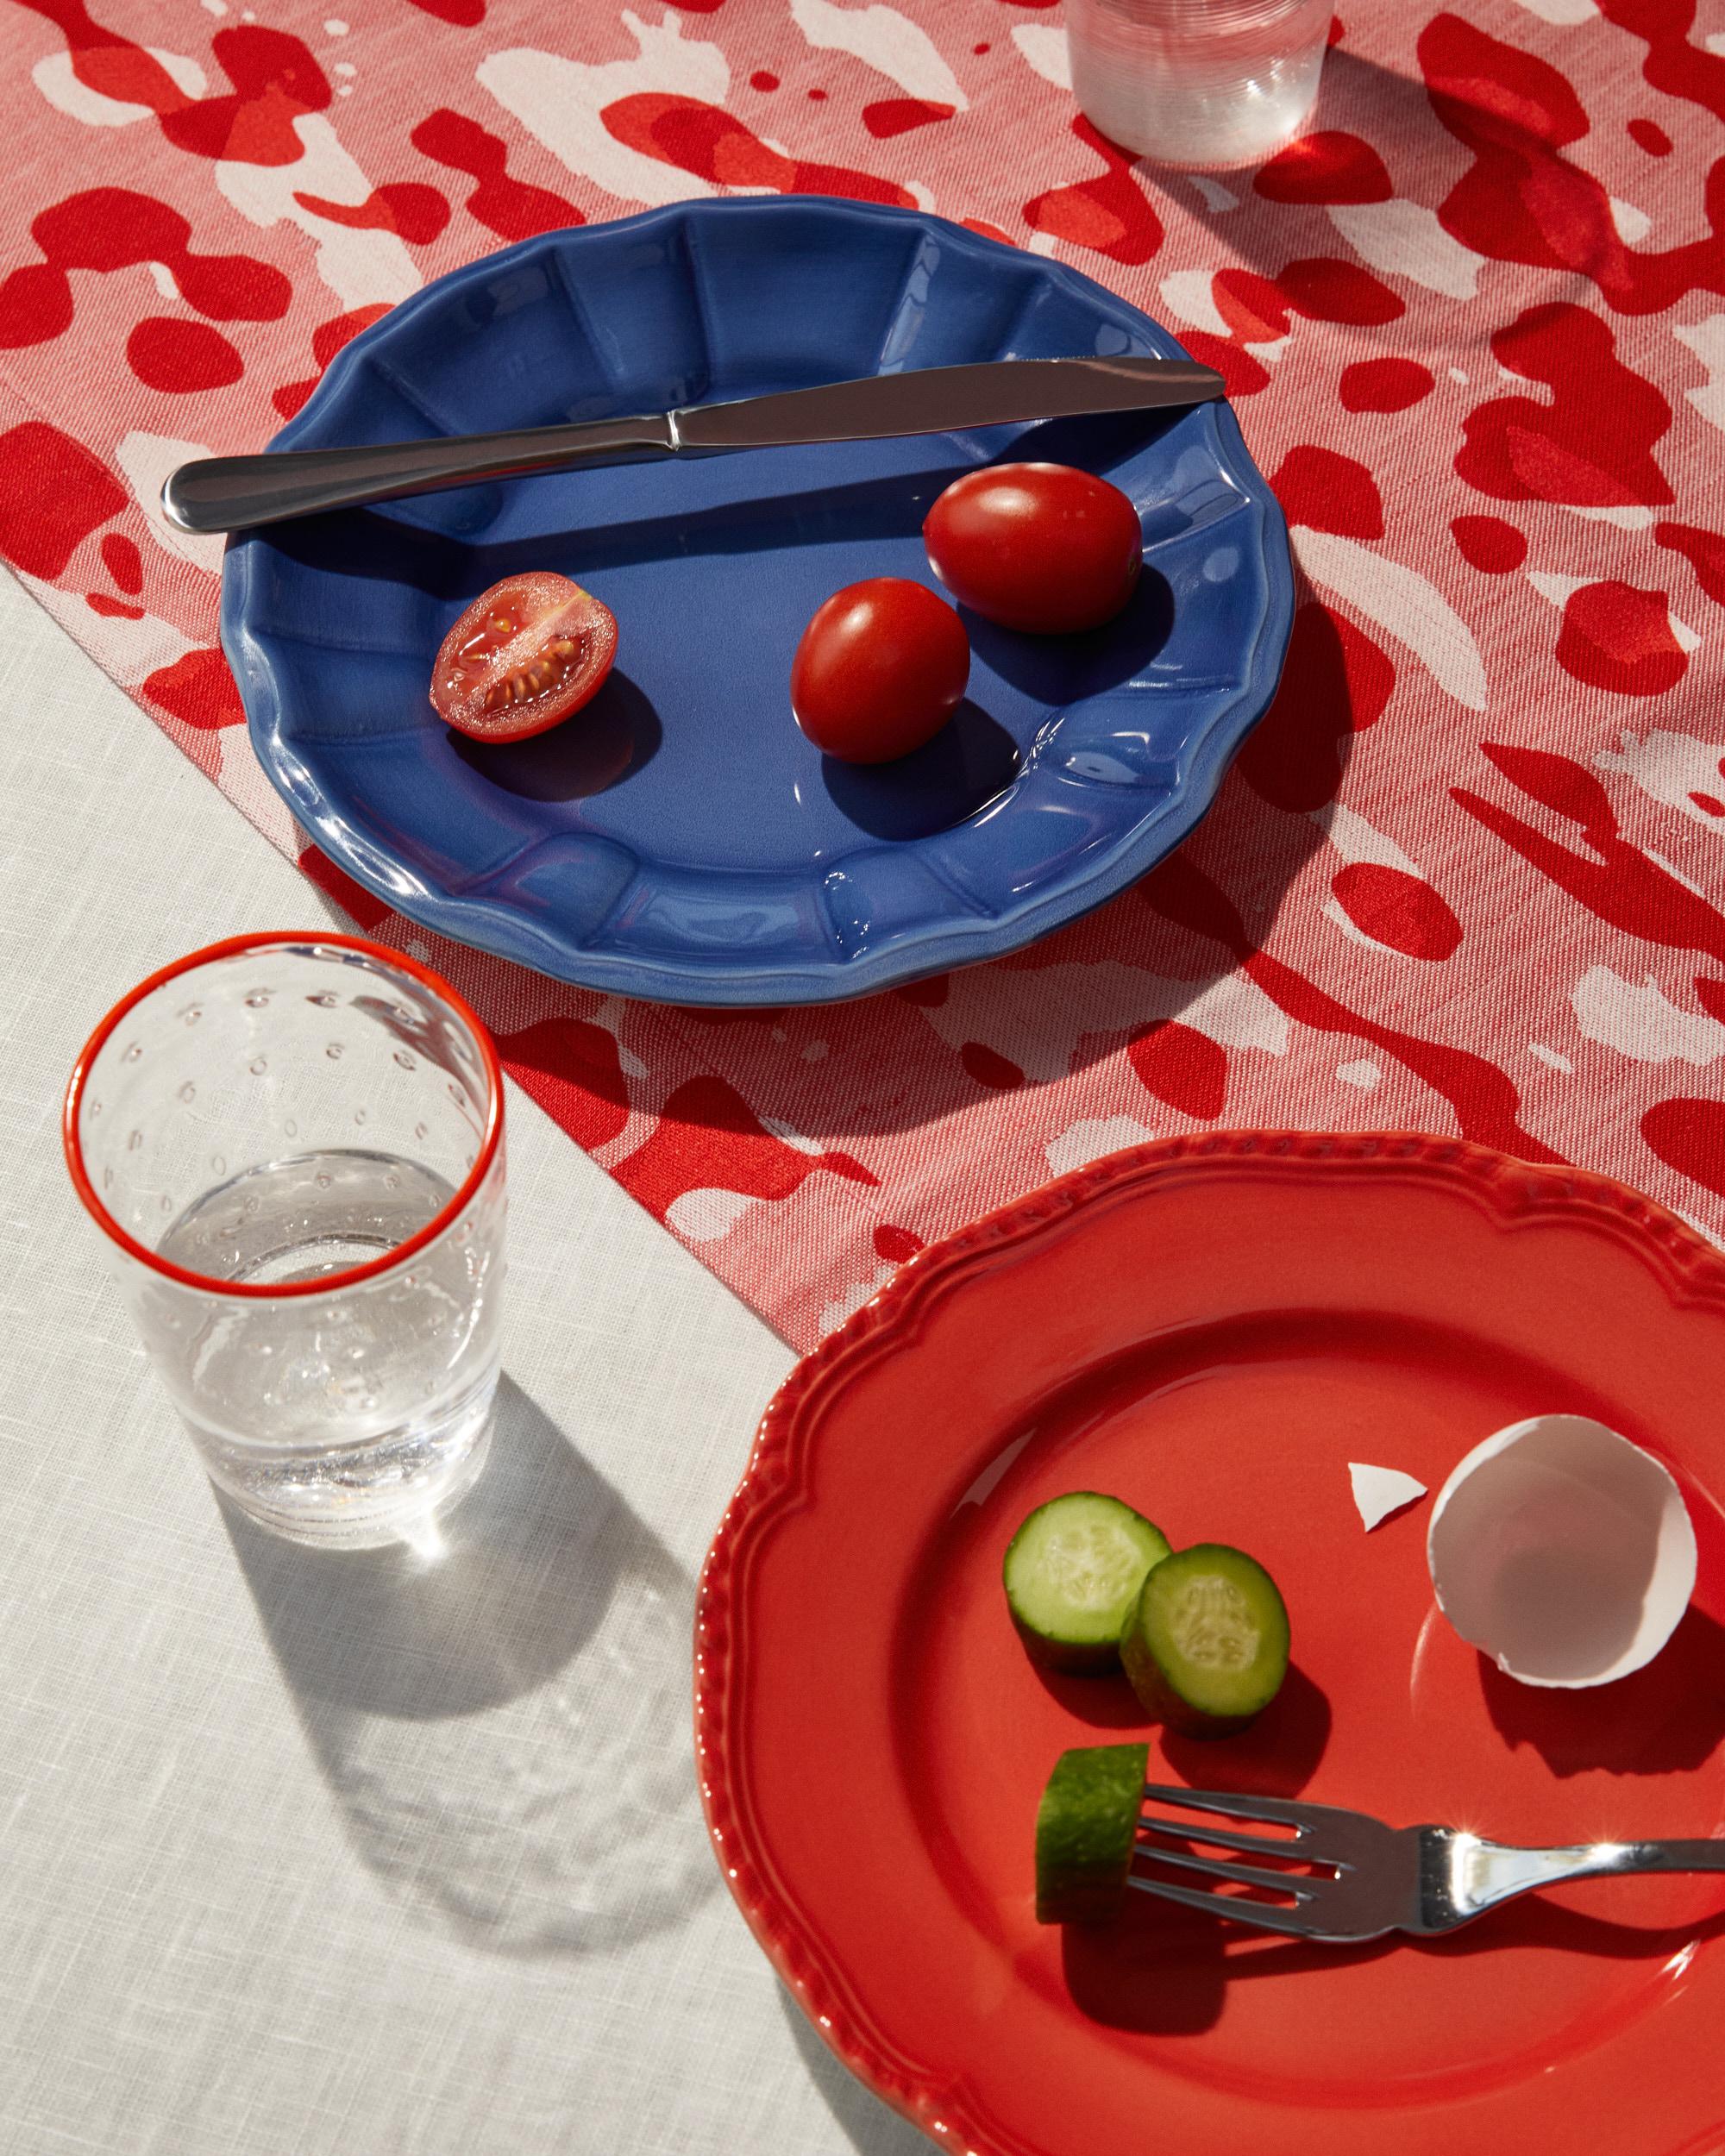 Ladies & Gentlemen Ceramic Set of 4 Prime Dinner Plates by Stories of Italy For Sale 7